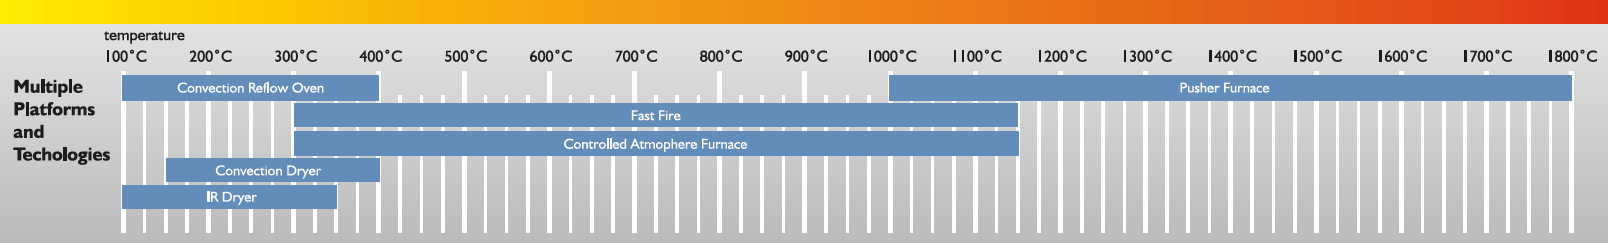 Temp chart furnace applications w reflow